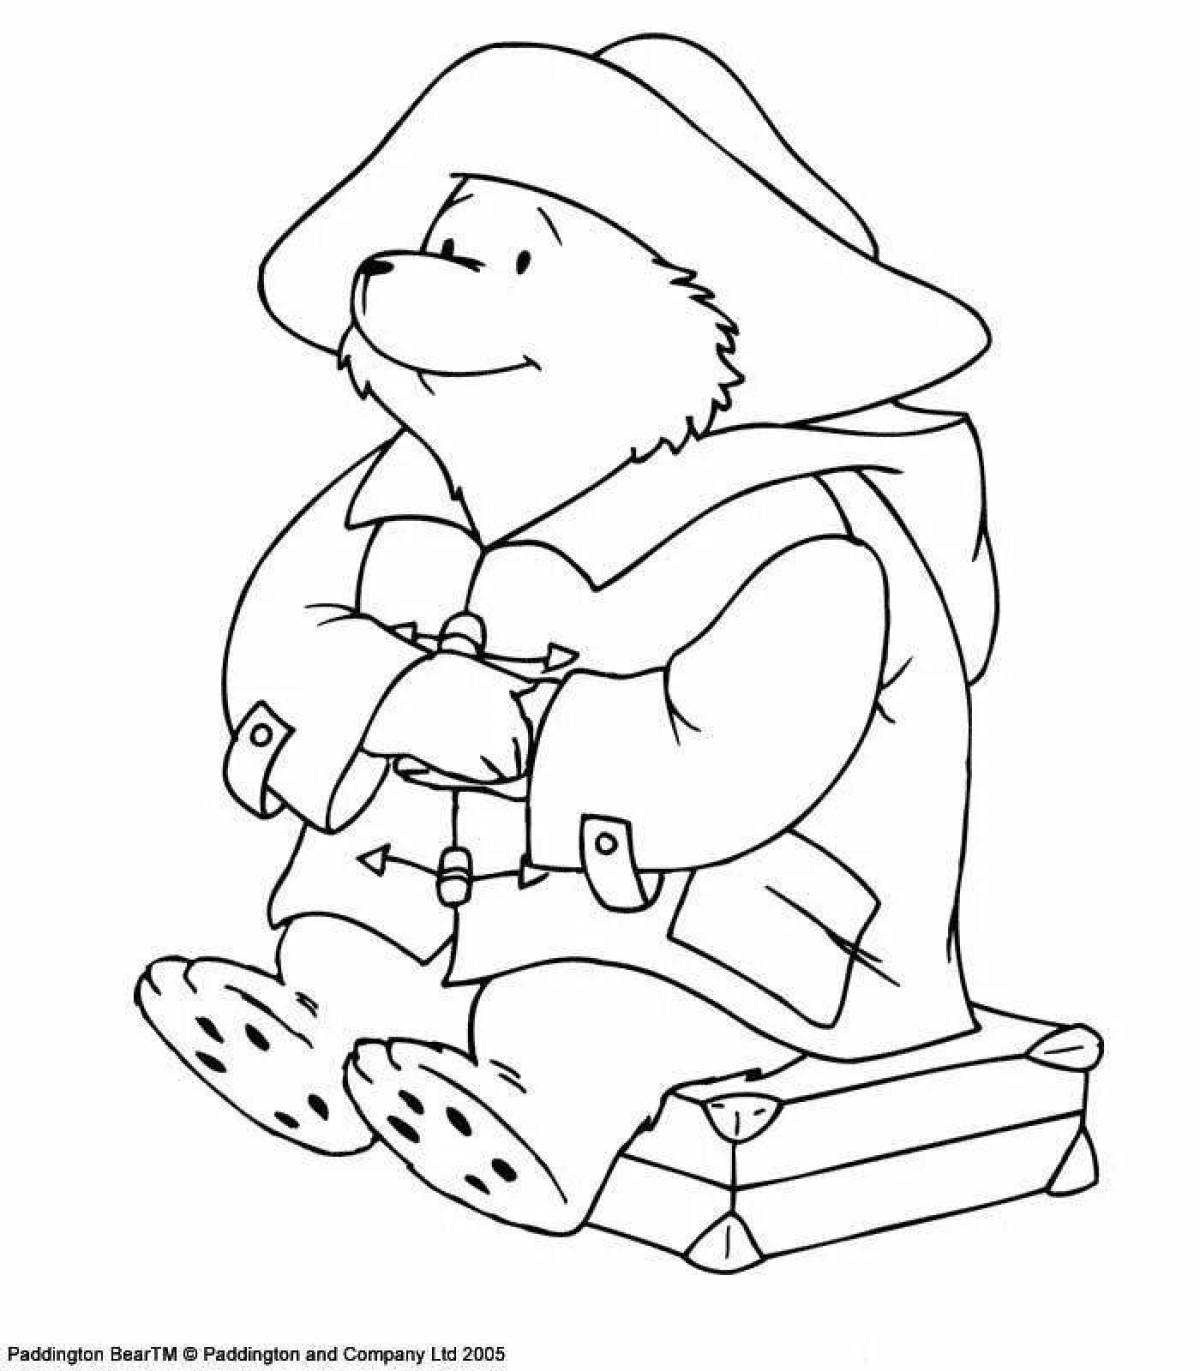 Paddington bear live coloring